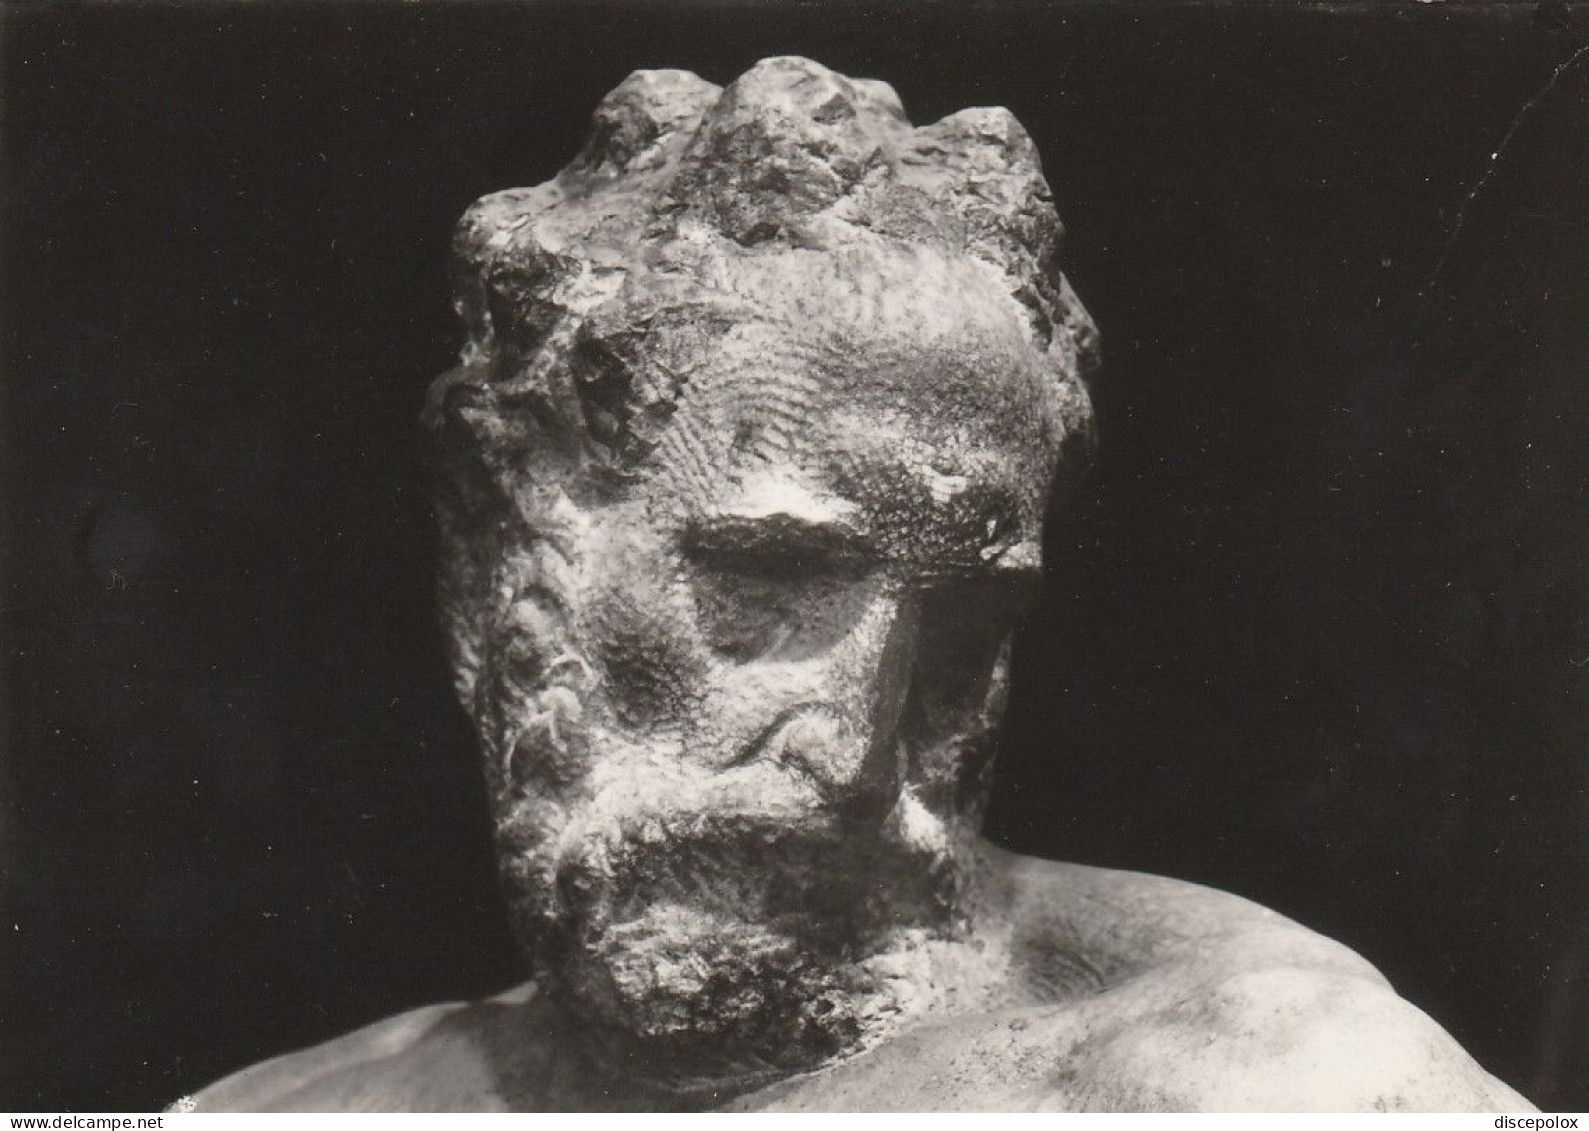 AD520 Michelangelo - Il Crepuscolo - Firenze - Cappelle Medicee - Scultura Sculpture - Skulpturen